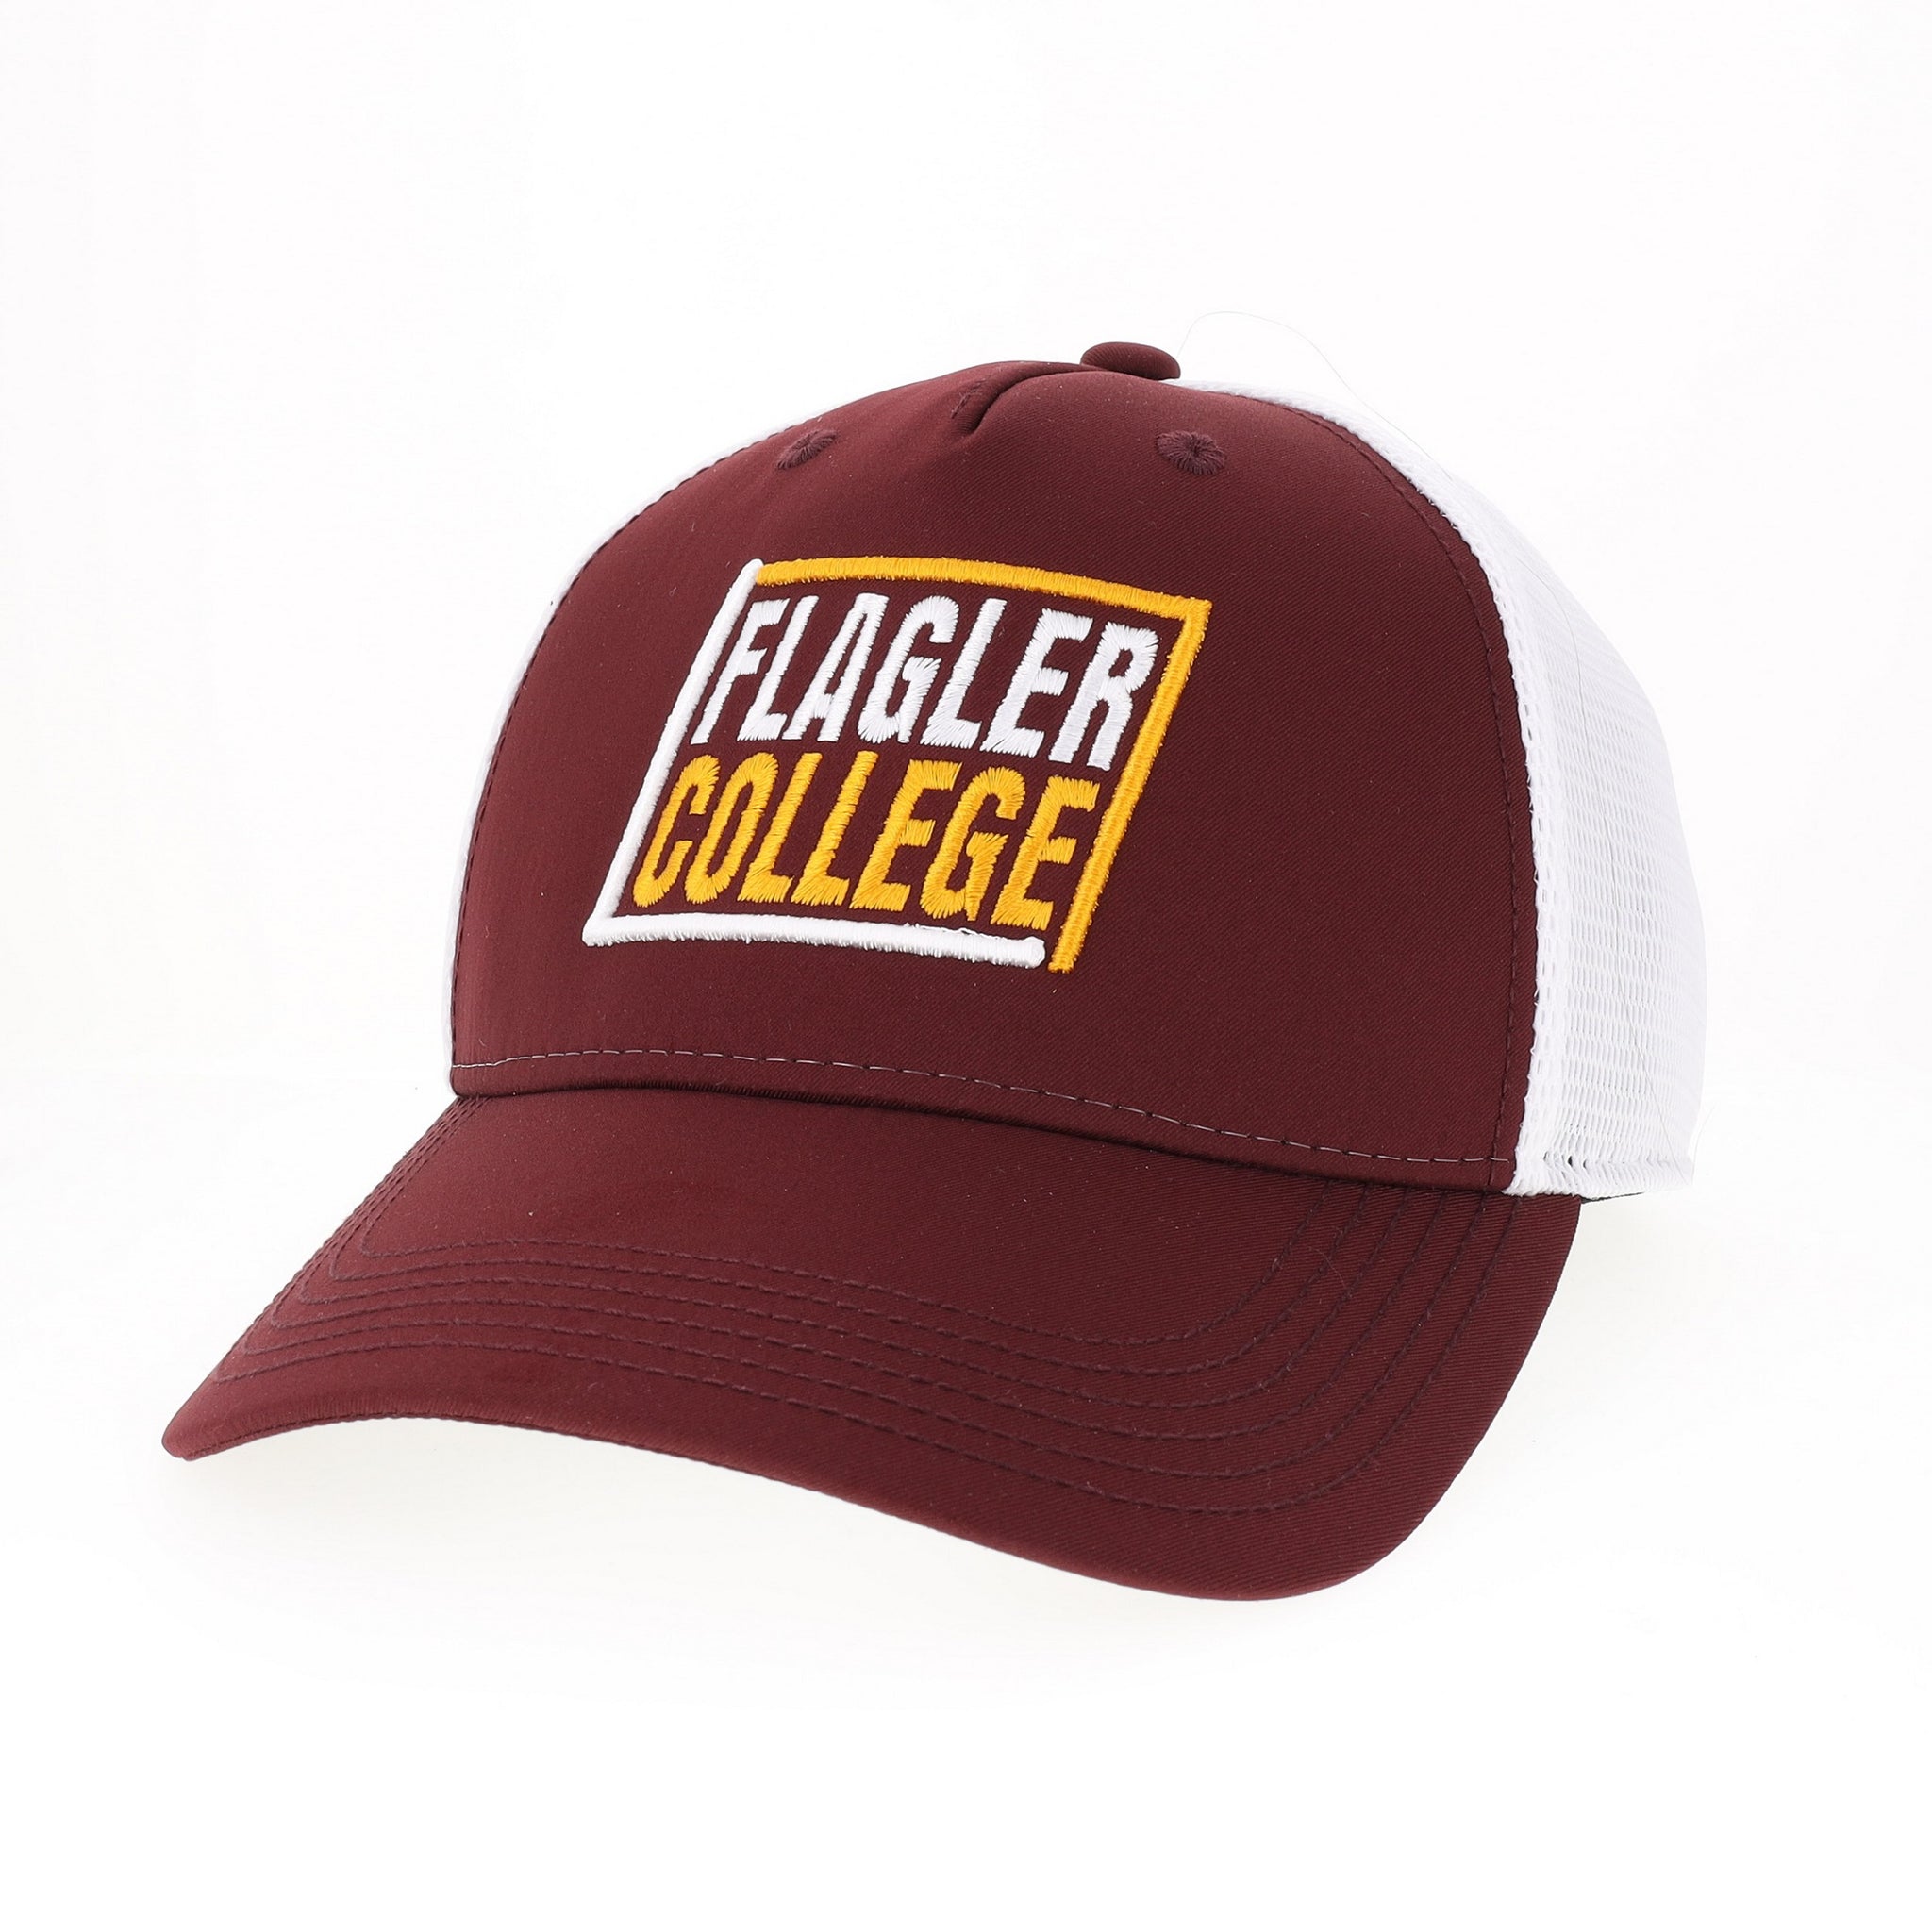 Flagler College Burgundy/White Trucker Hat